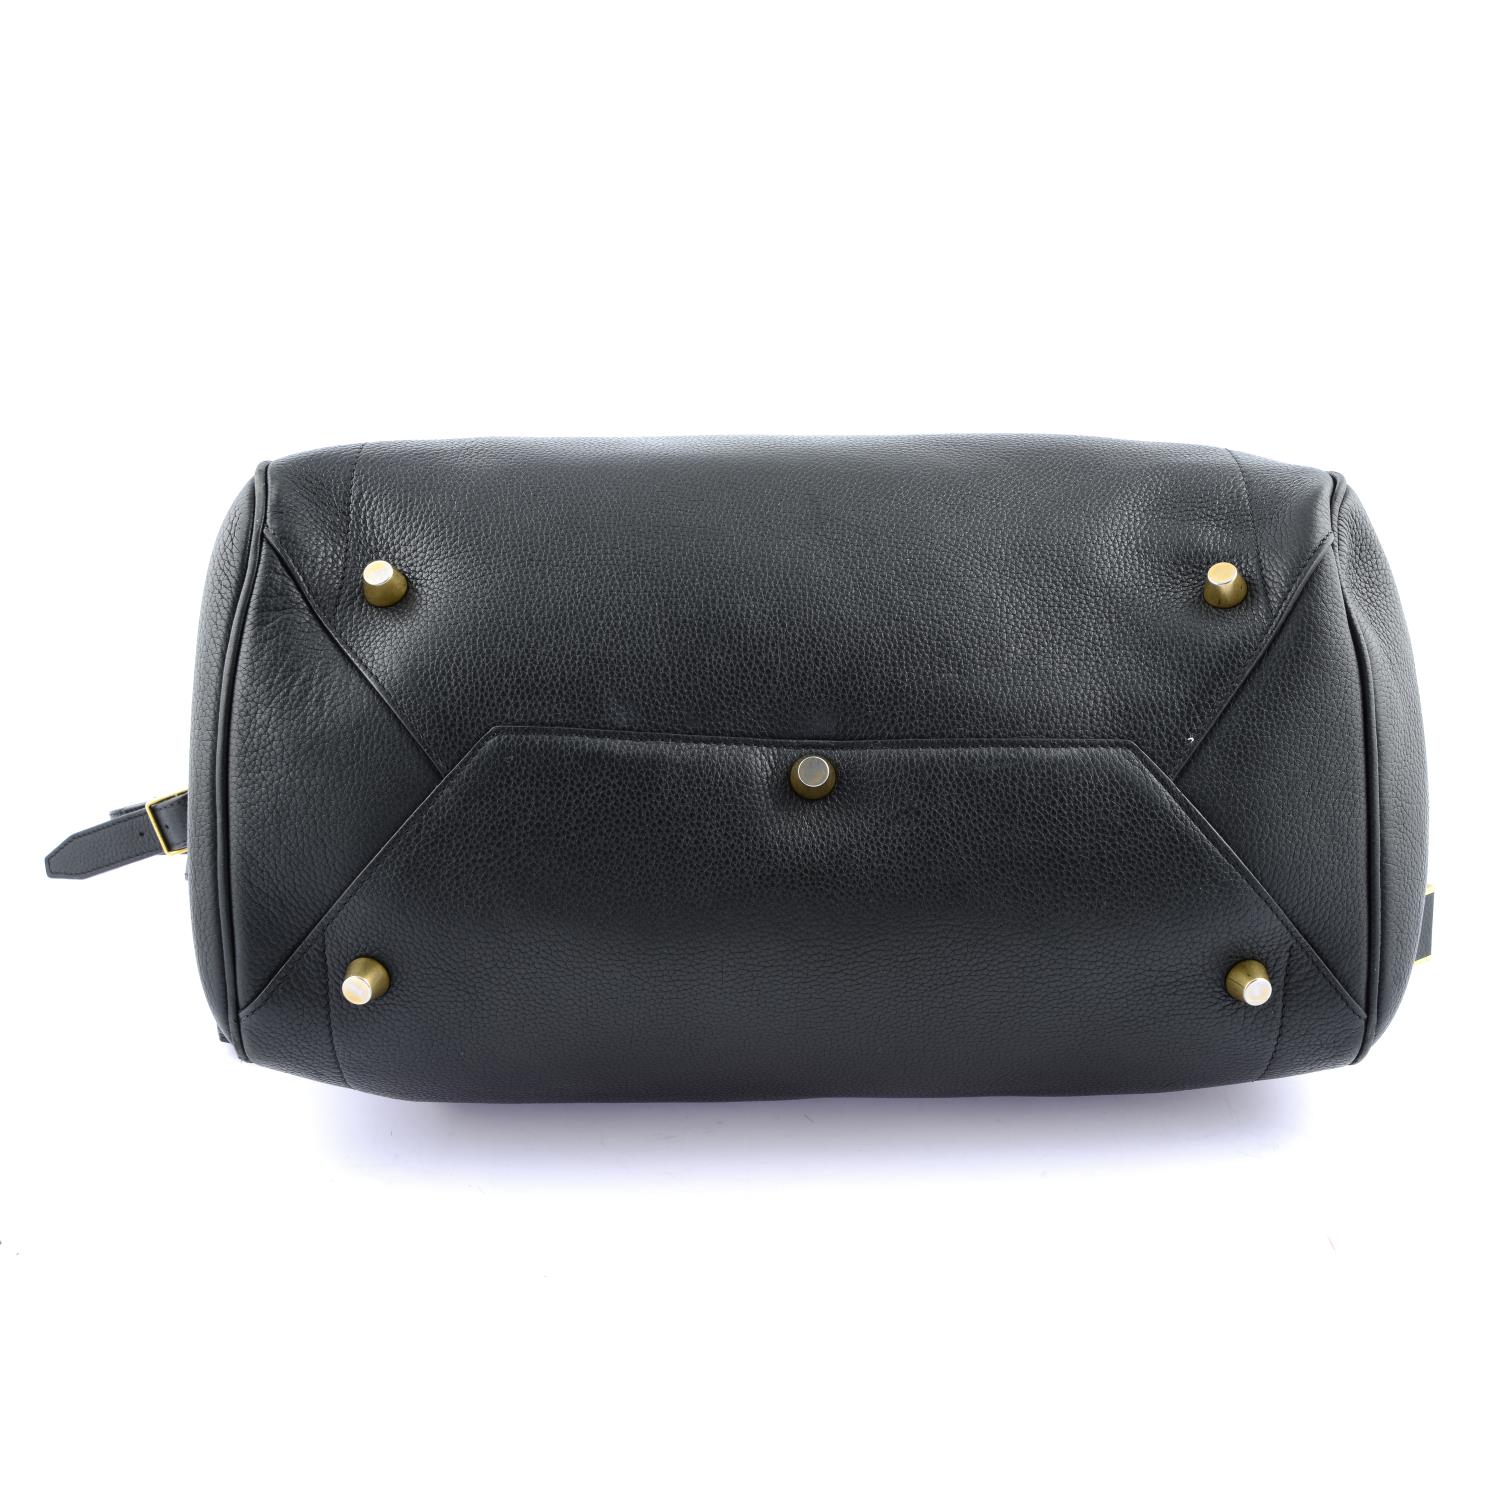 CÉLINE - a leather Boston handbag. - Image 4 of 4